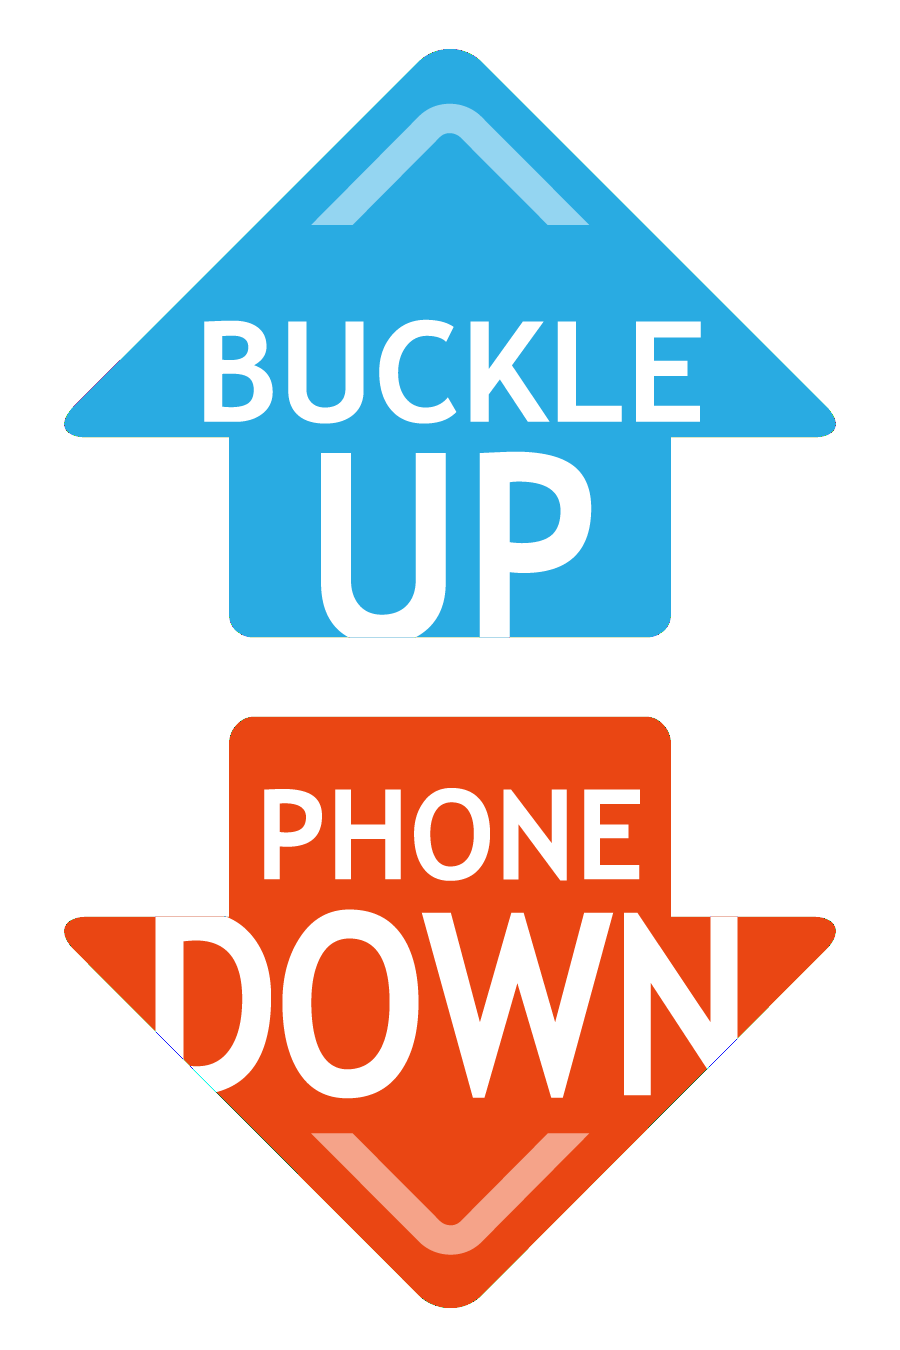 Missouri Dot Logo - Buckle Up Phone Down